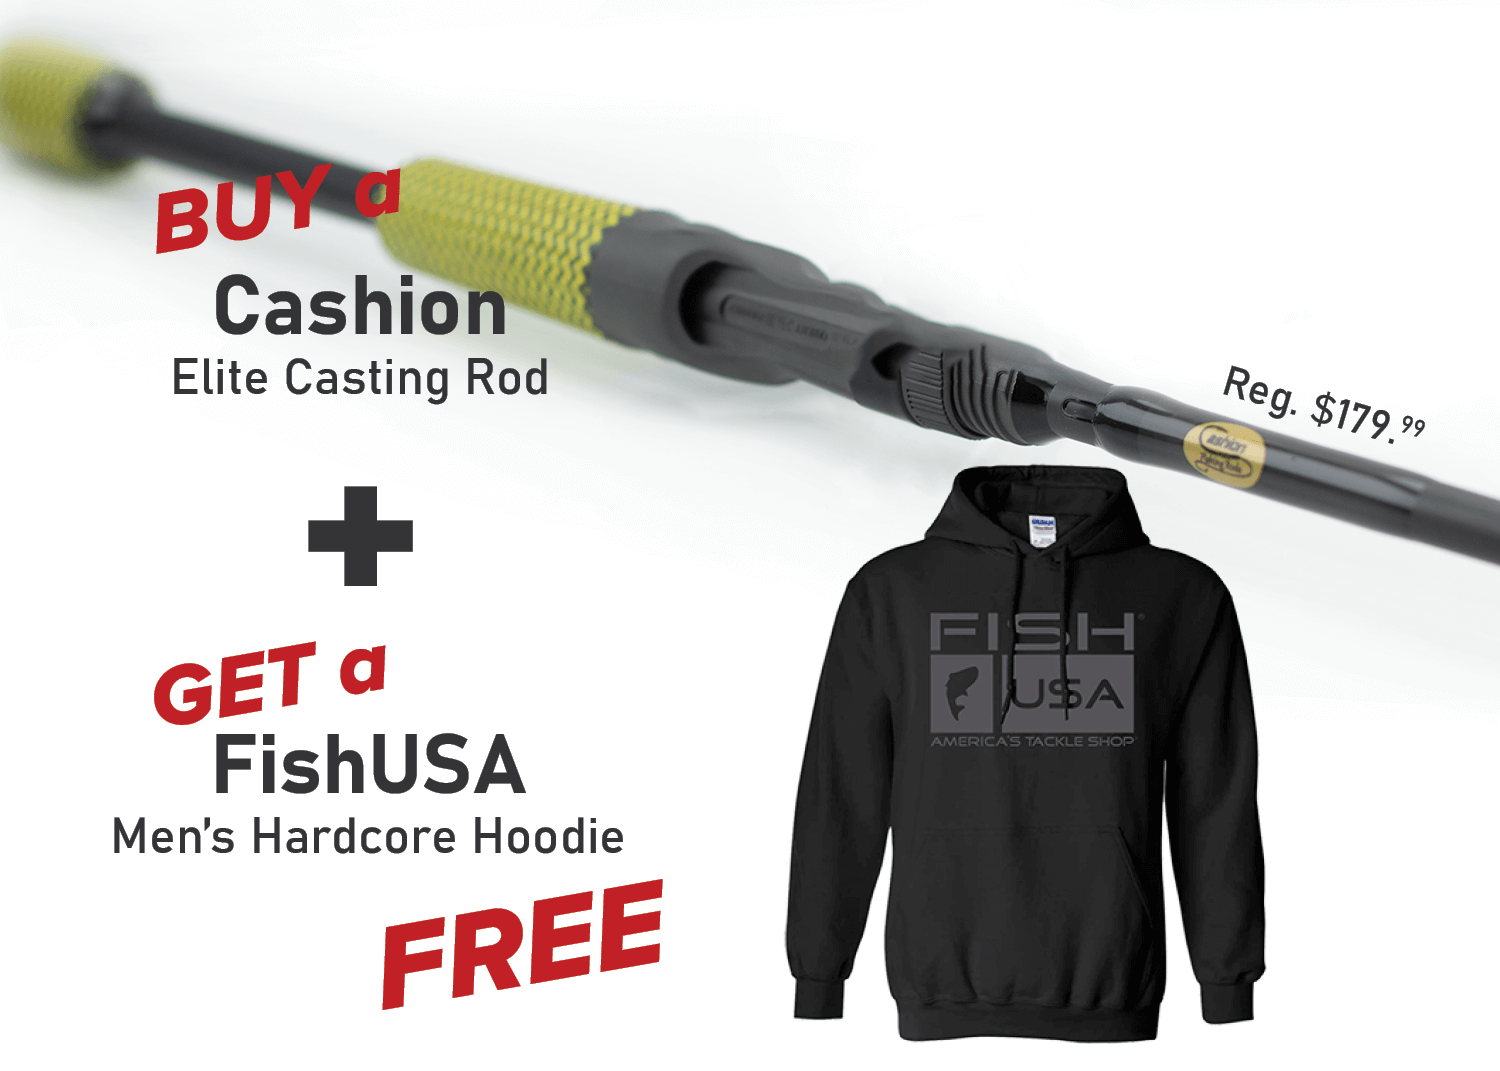 Buy a Cashion Elite Casting Rod & Get a FREE FishUSA Men's Hardcore Hoodie!